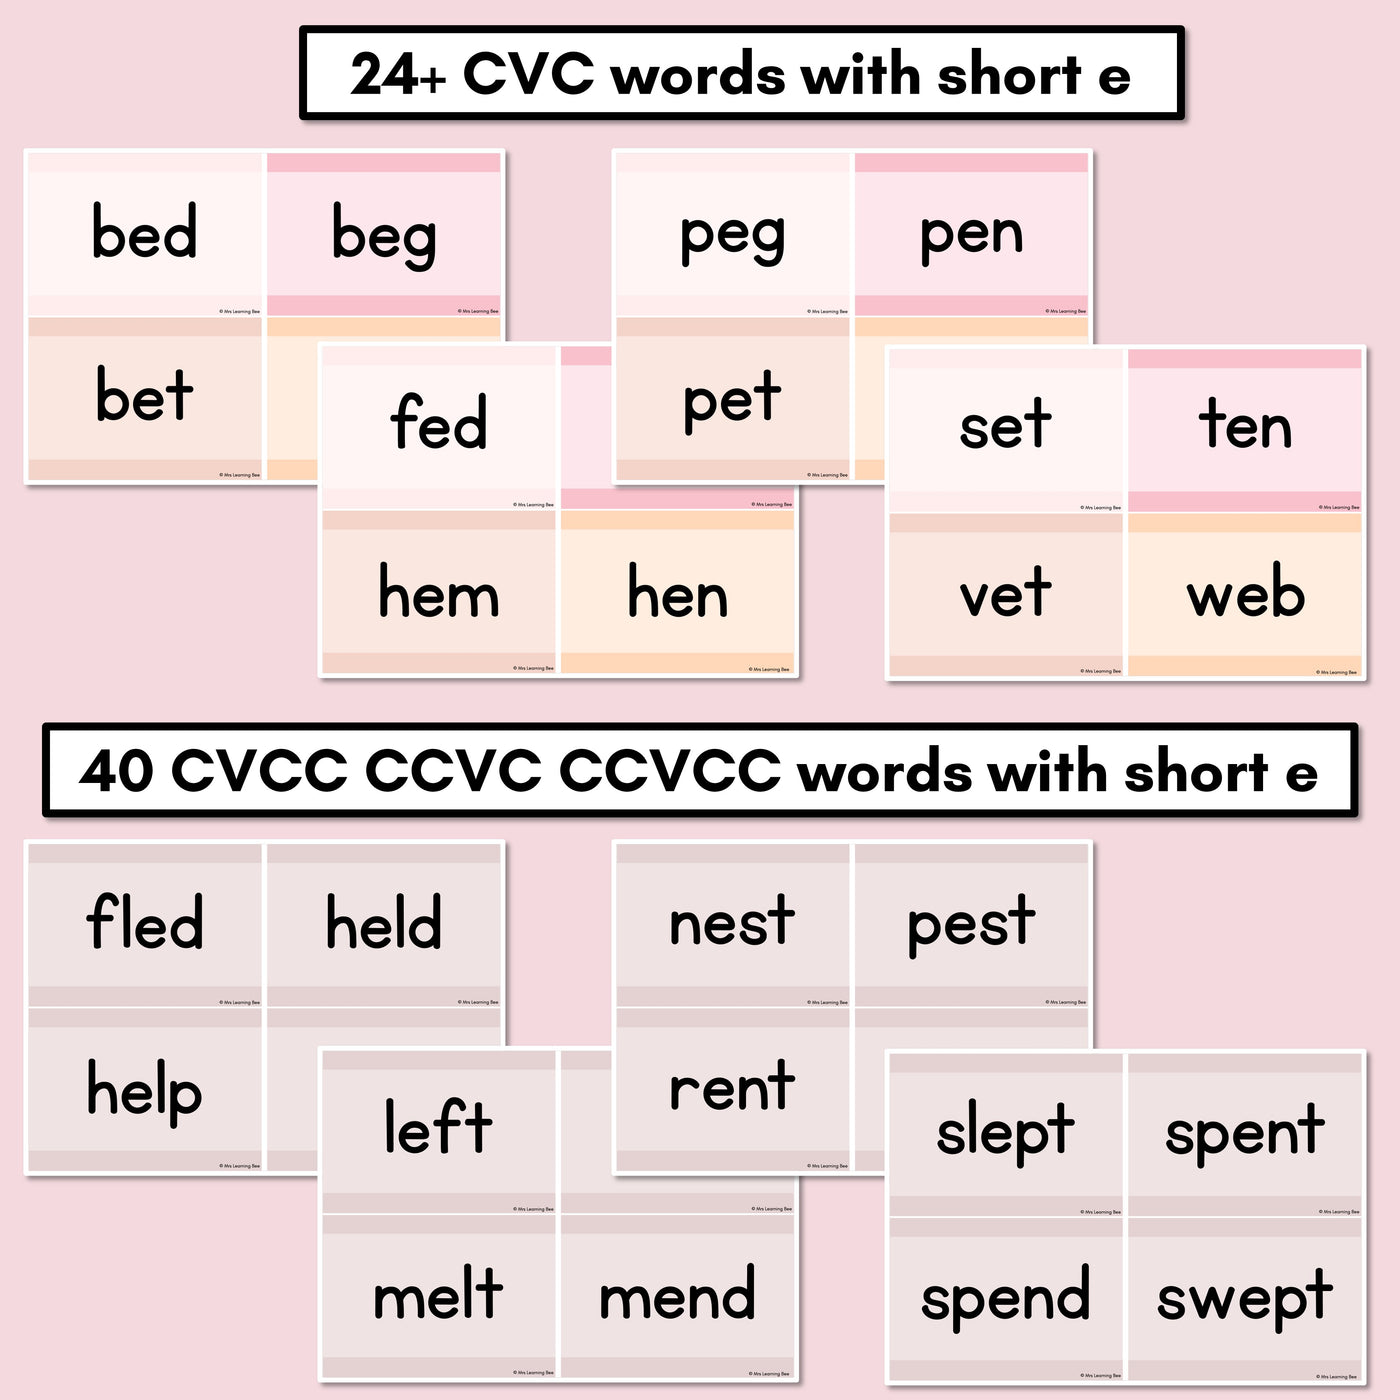 Neutral CVC CVCC CCVC Short E Decodable Words and Sentence Cards